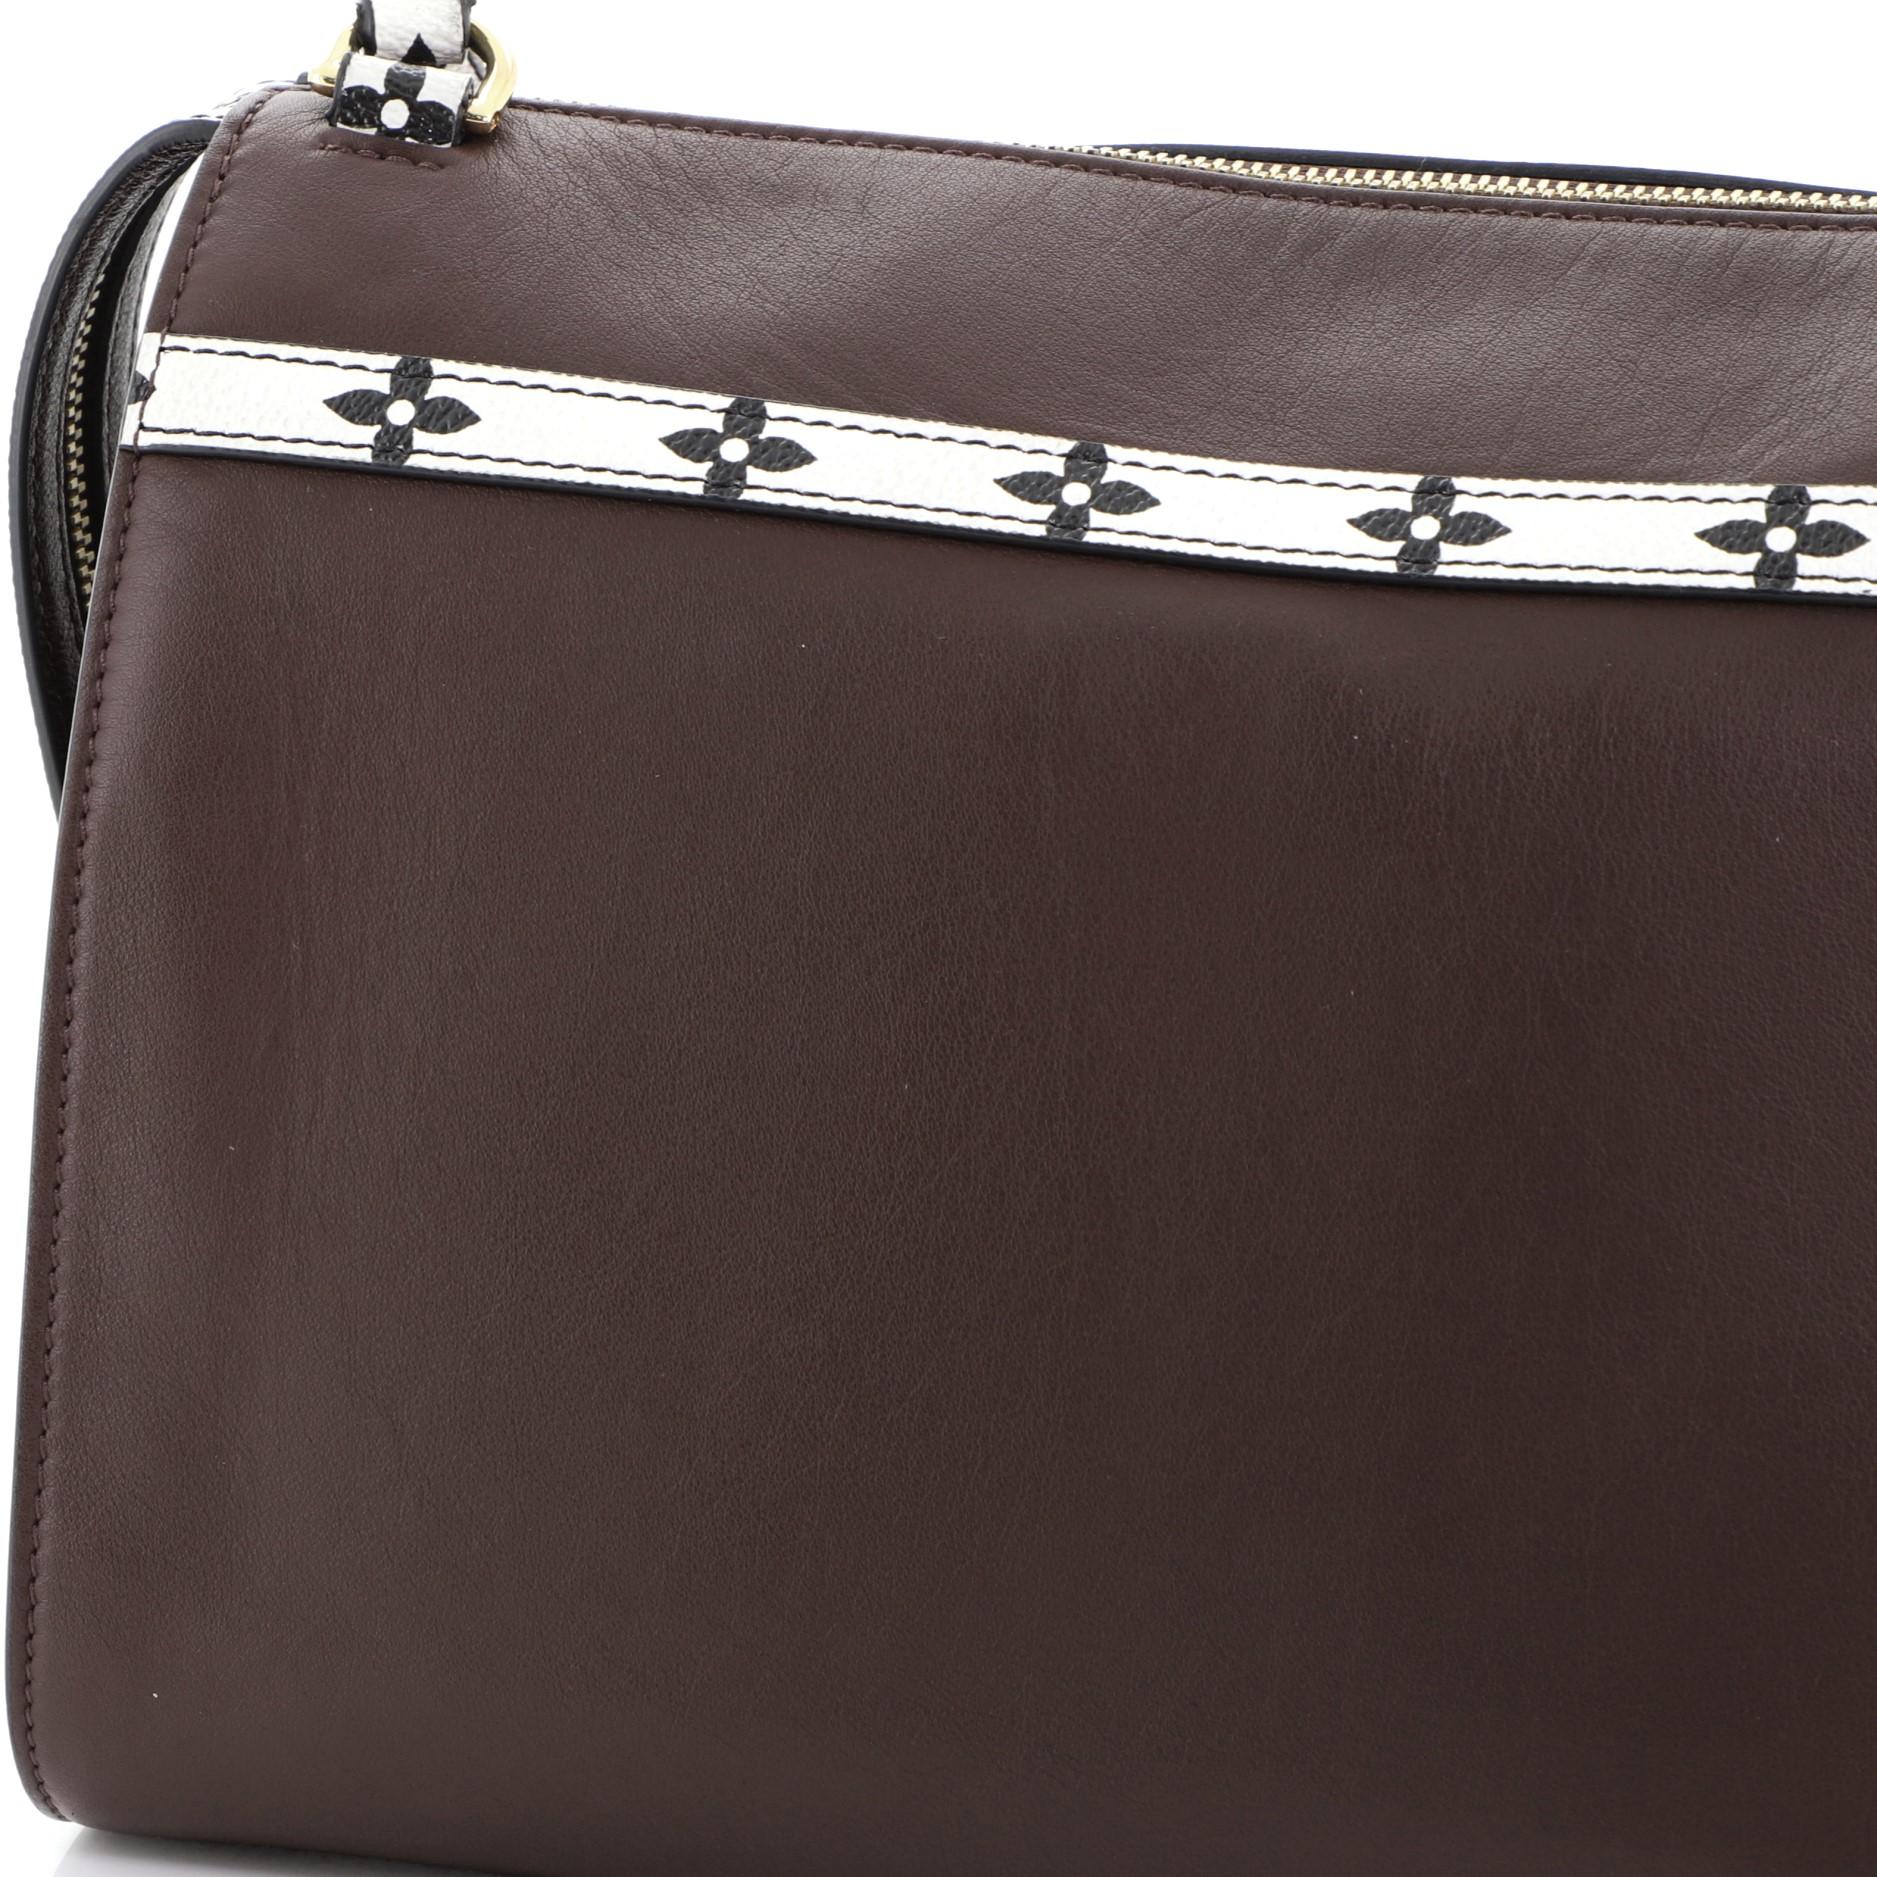 Women's or Men's Louis Vuitton Speedy Amazon Bag